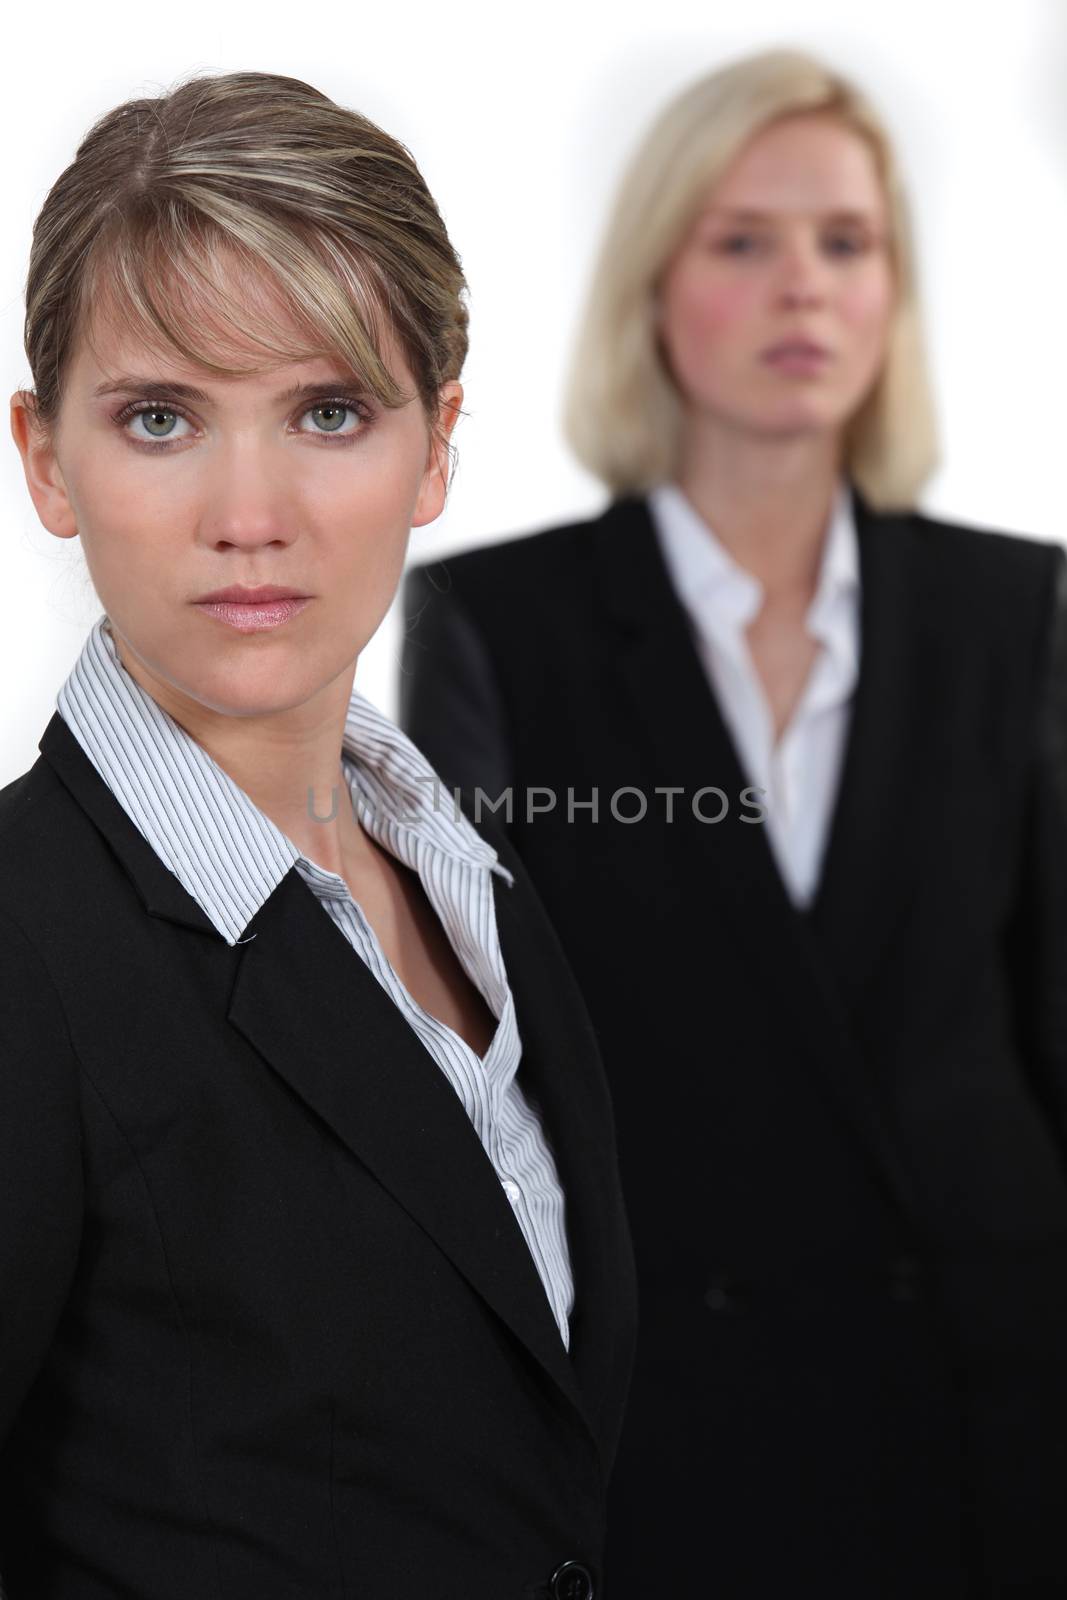 Serious businesswomen by phovoir